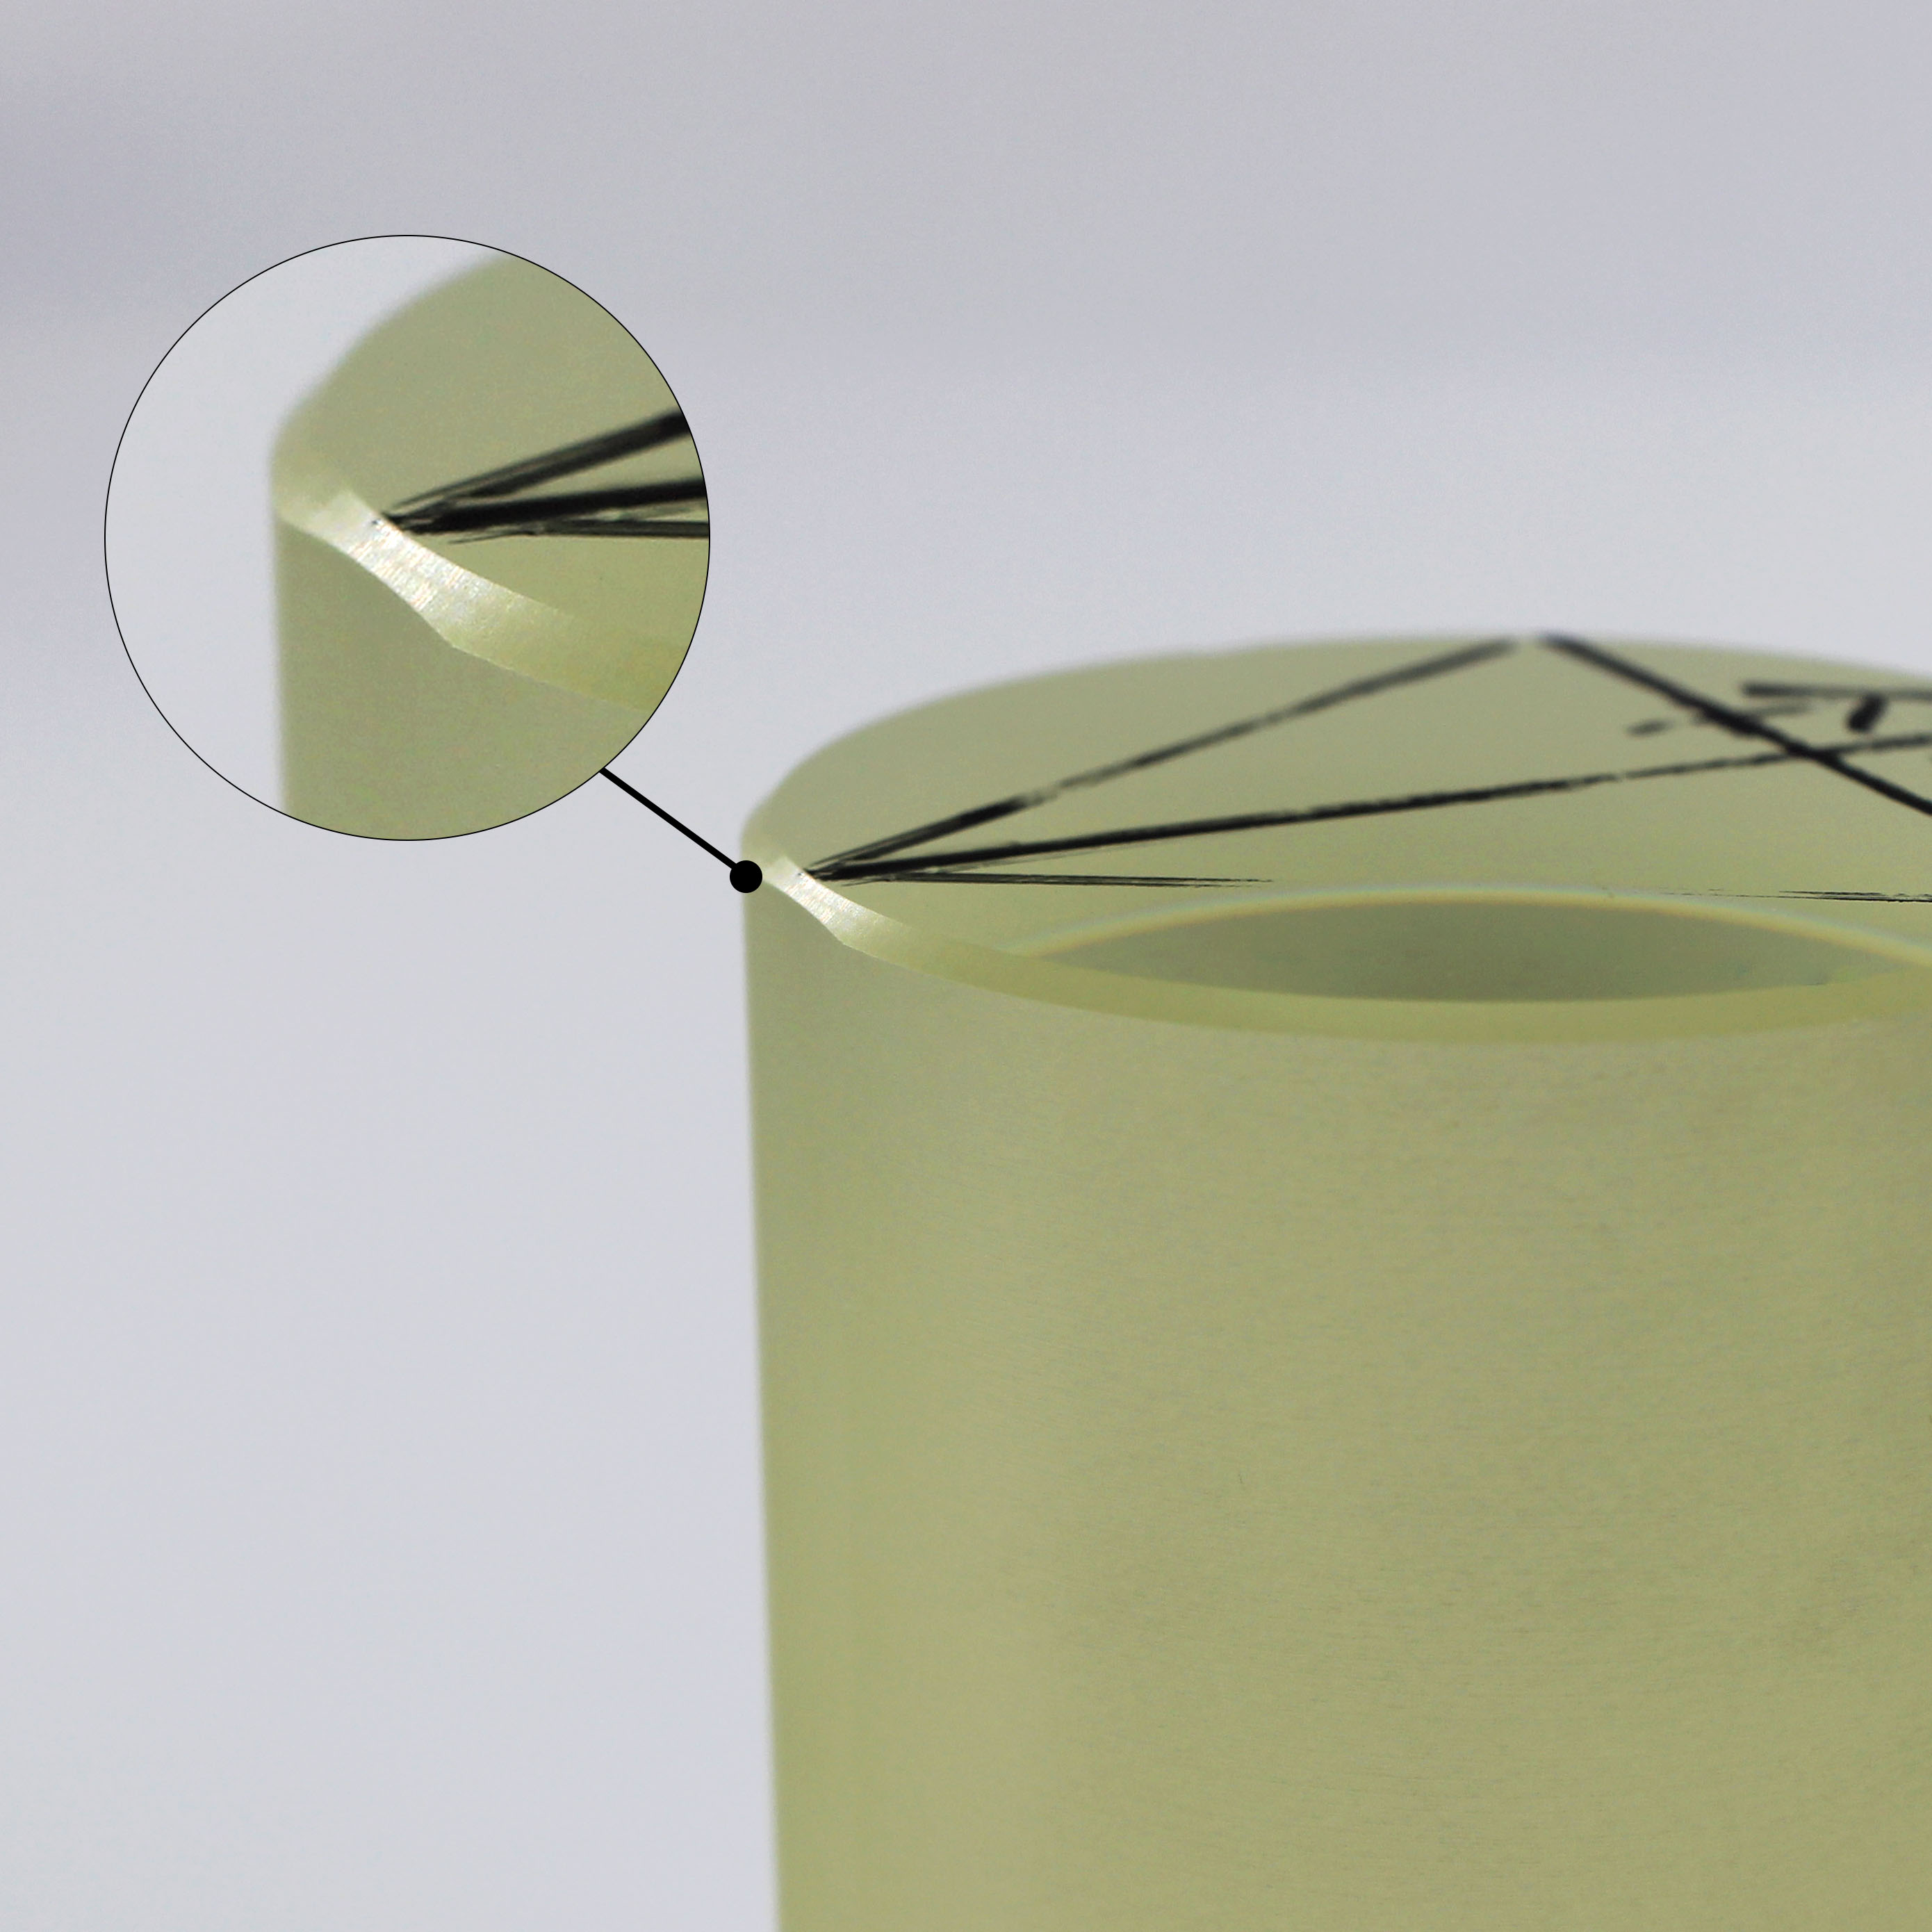 China Optical Grade Lithium Tantalate (LiTaO3) Crystal Single Crystal Boule Lens